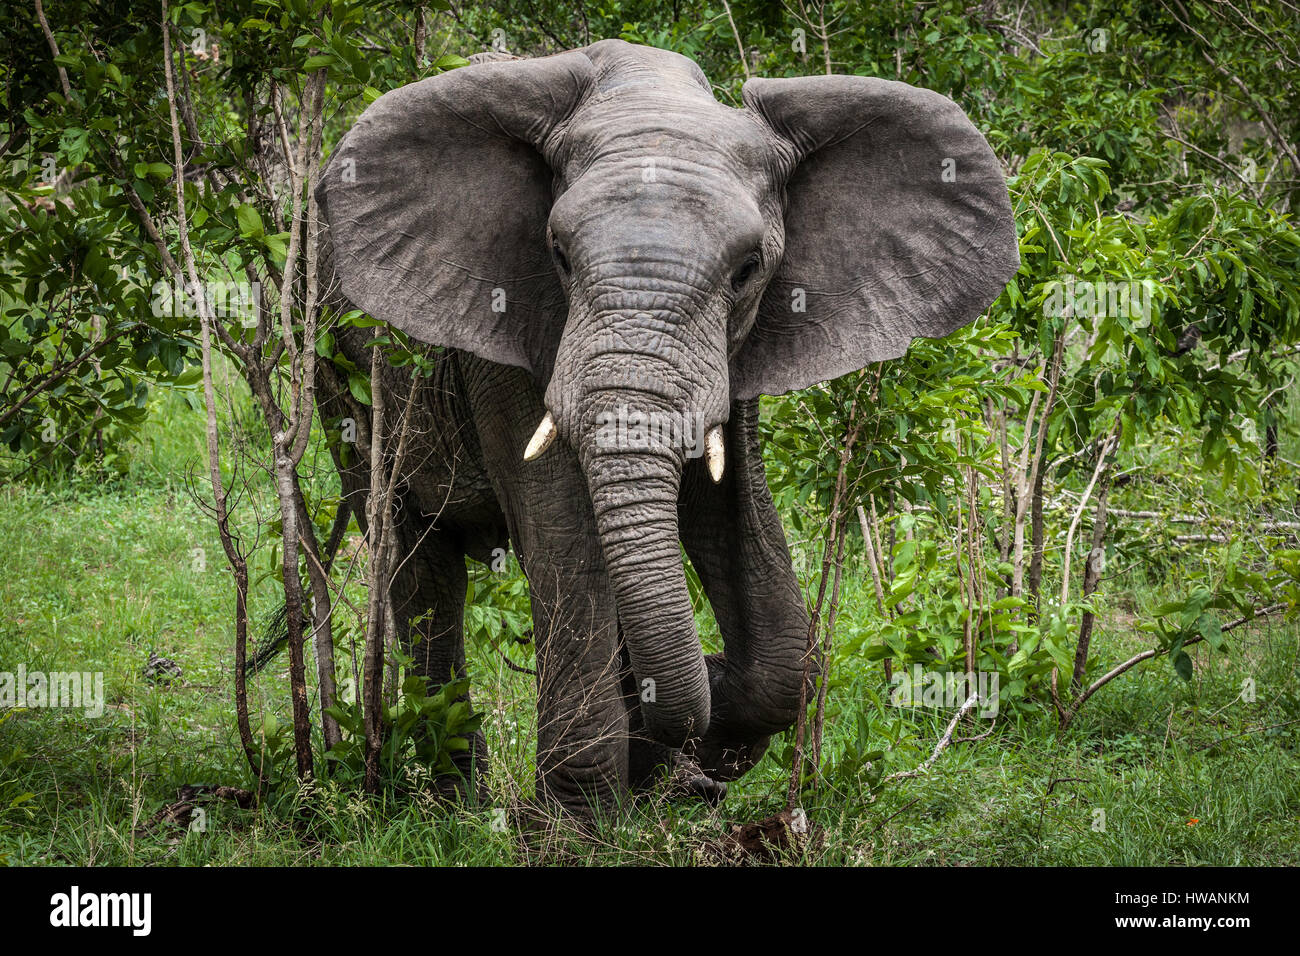 Parco Nazionale di Kruger ha abbondanza di elefanti. Foto Stock